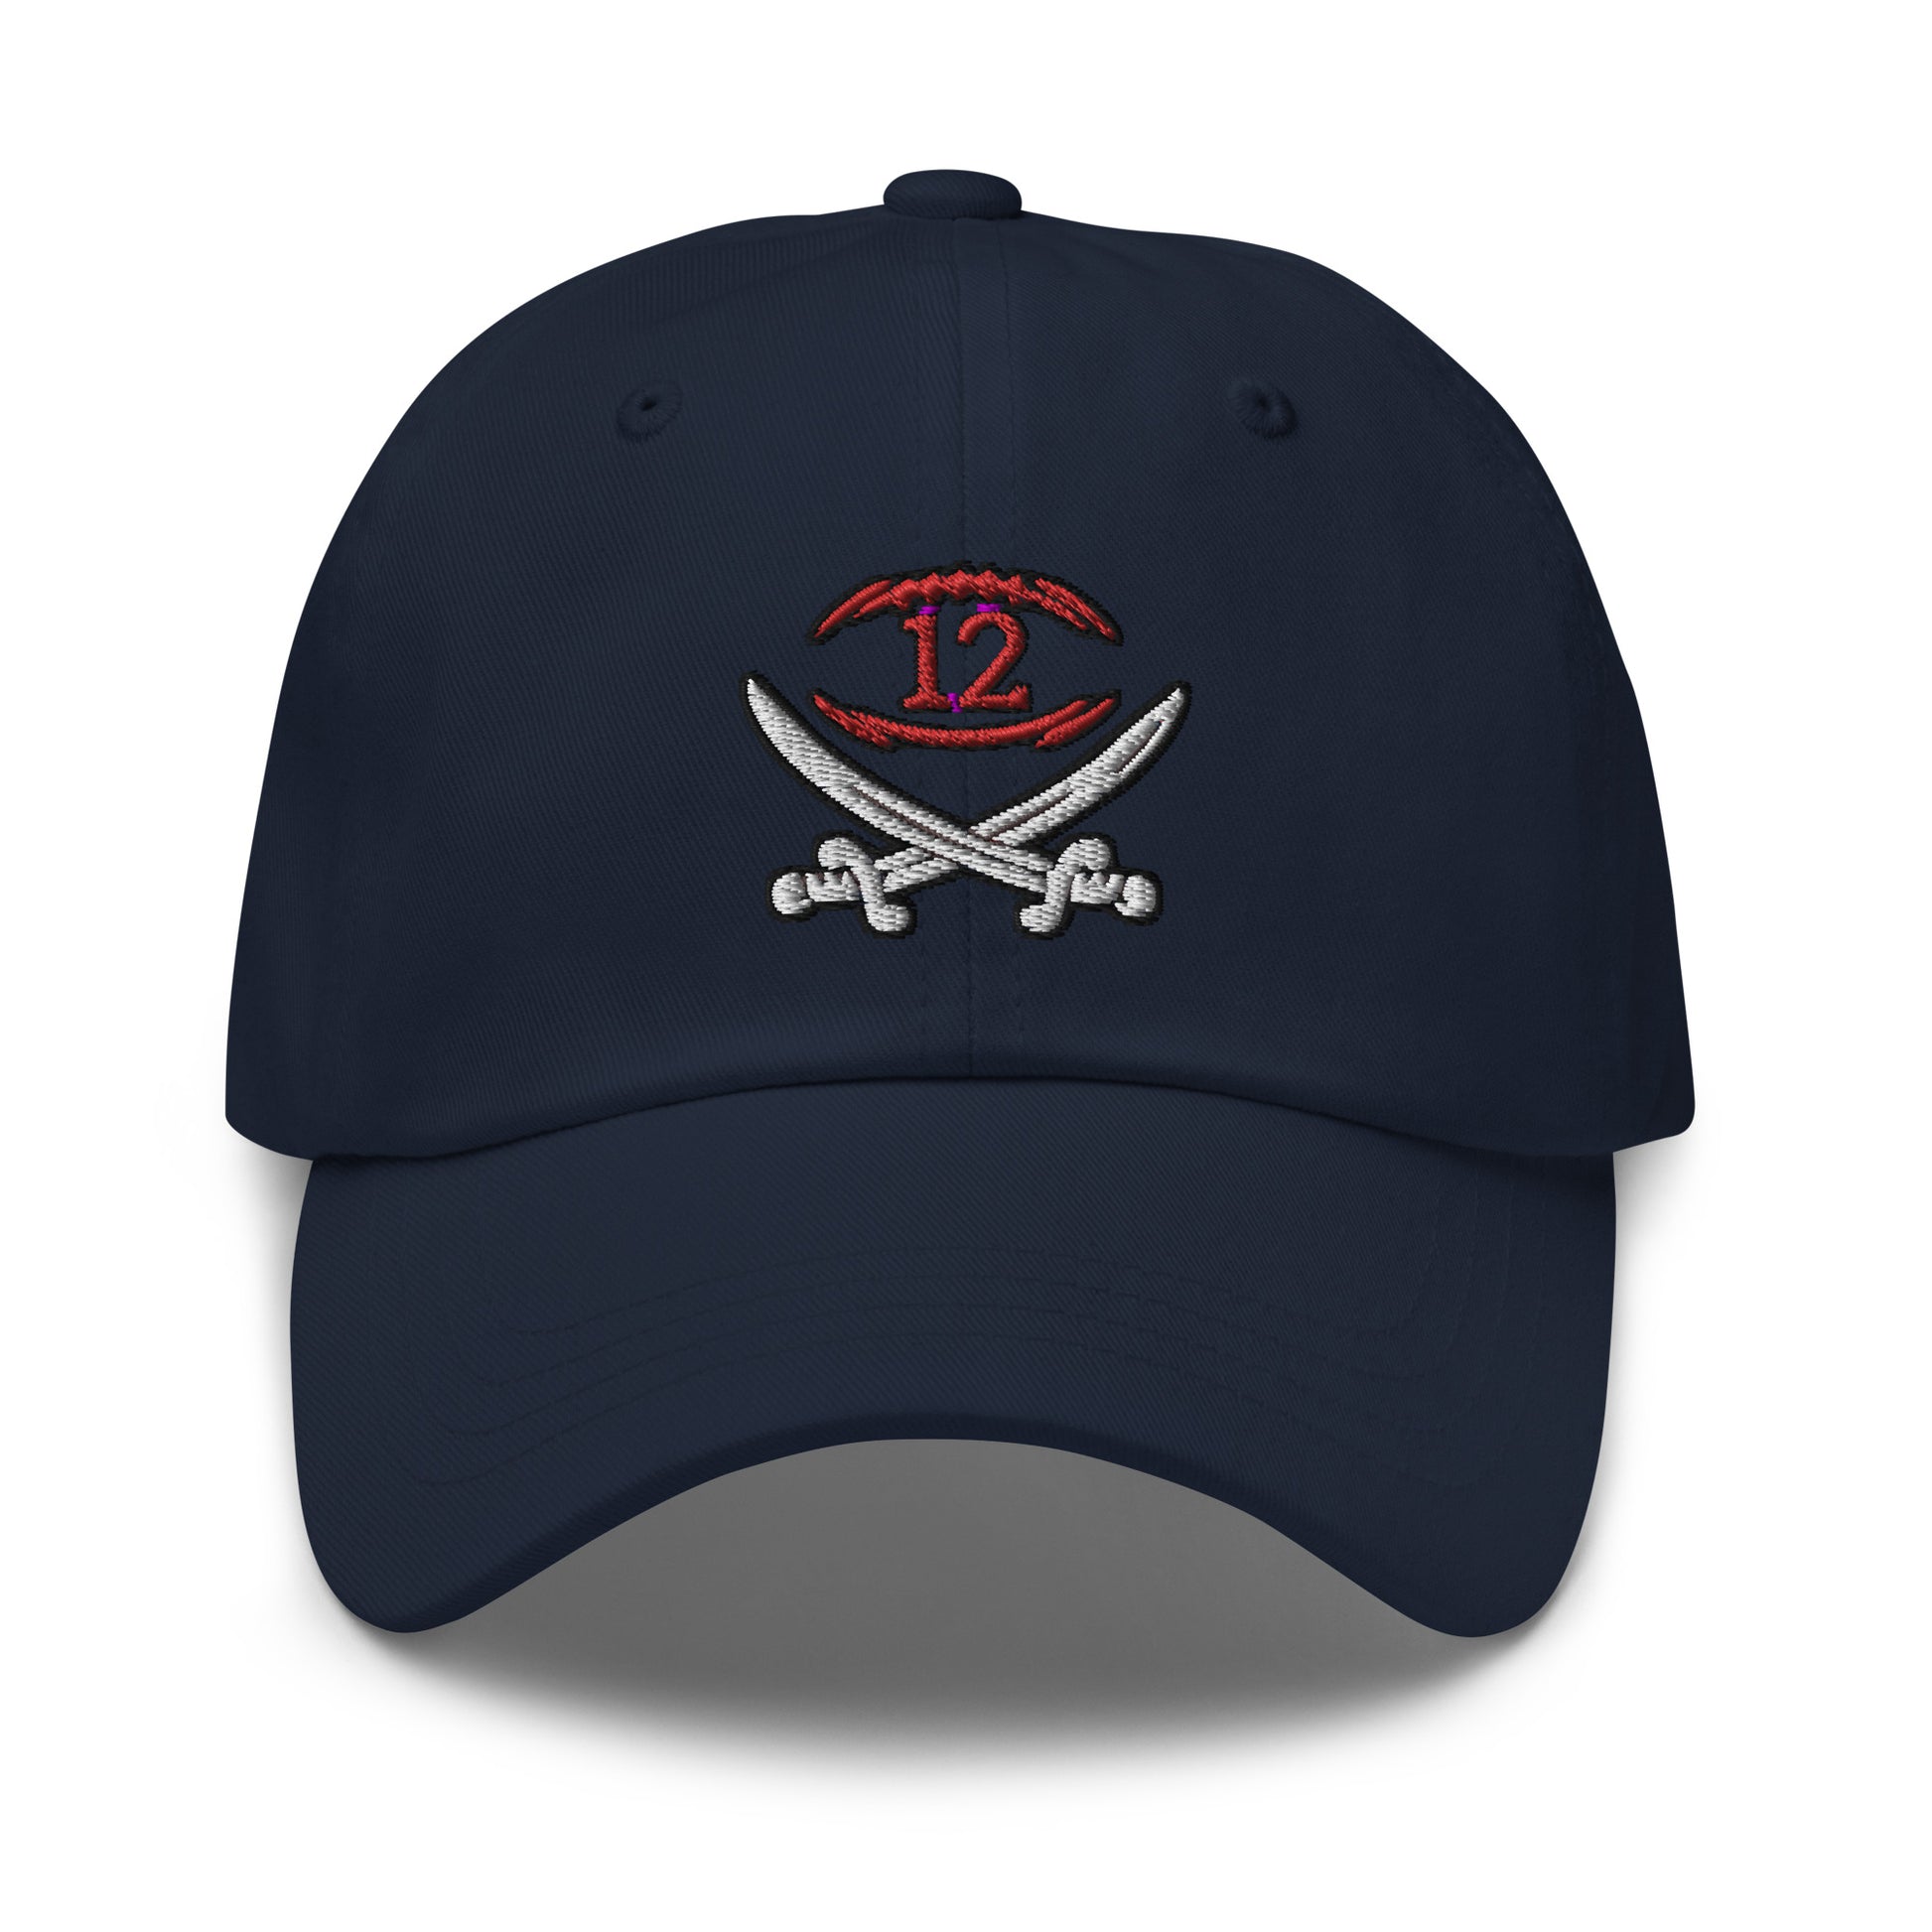 Tom Brady Hat / TB12 Hat / Tampa Bay Buccaneers / TB Dad hat